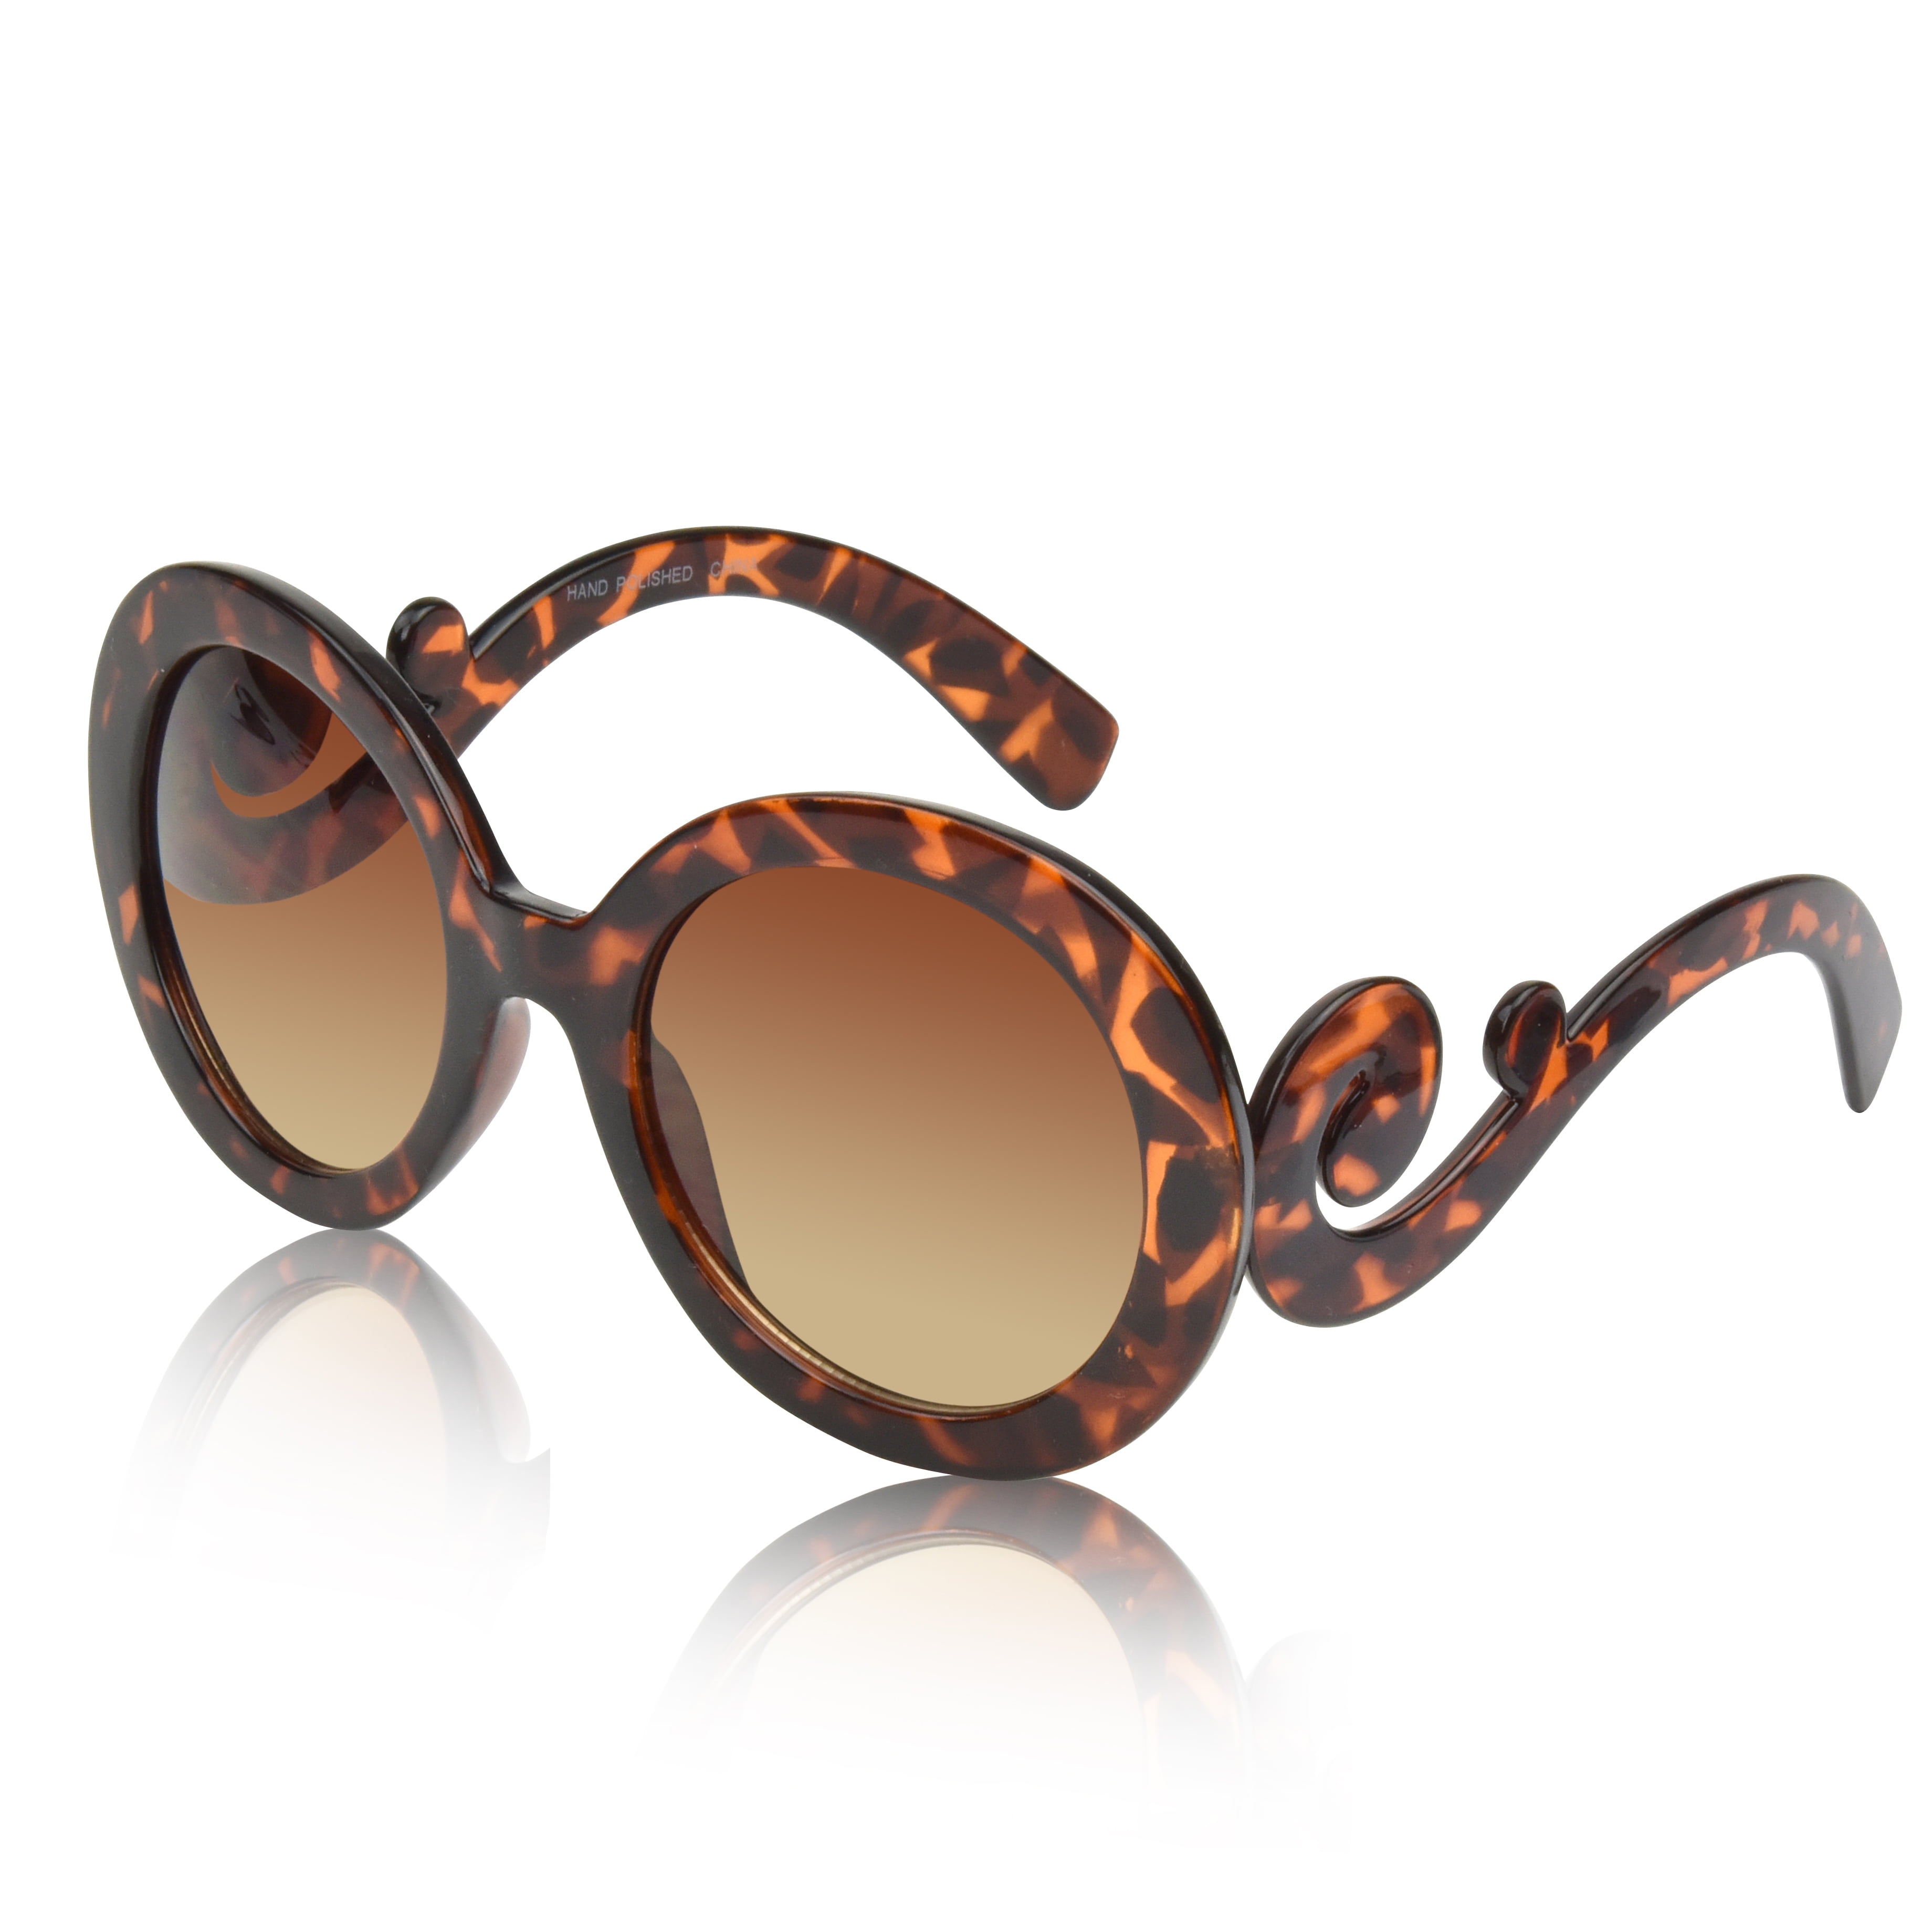 Women Inspired Round High Baroque Swirl Arms Fashion Design Oversize Sunglasses